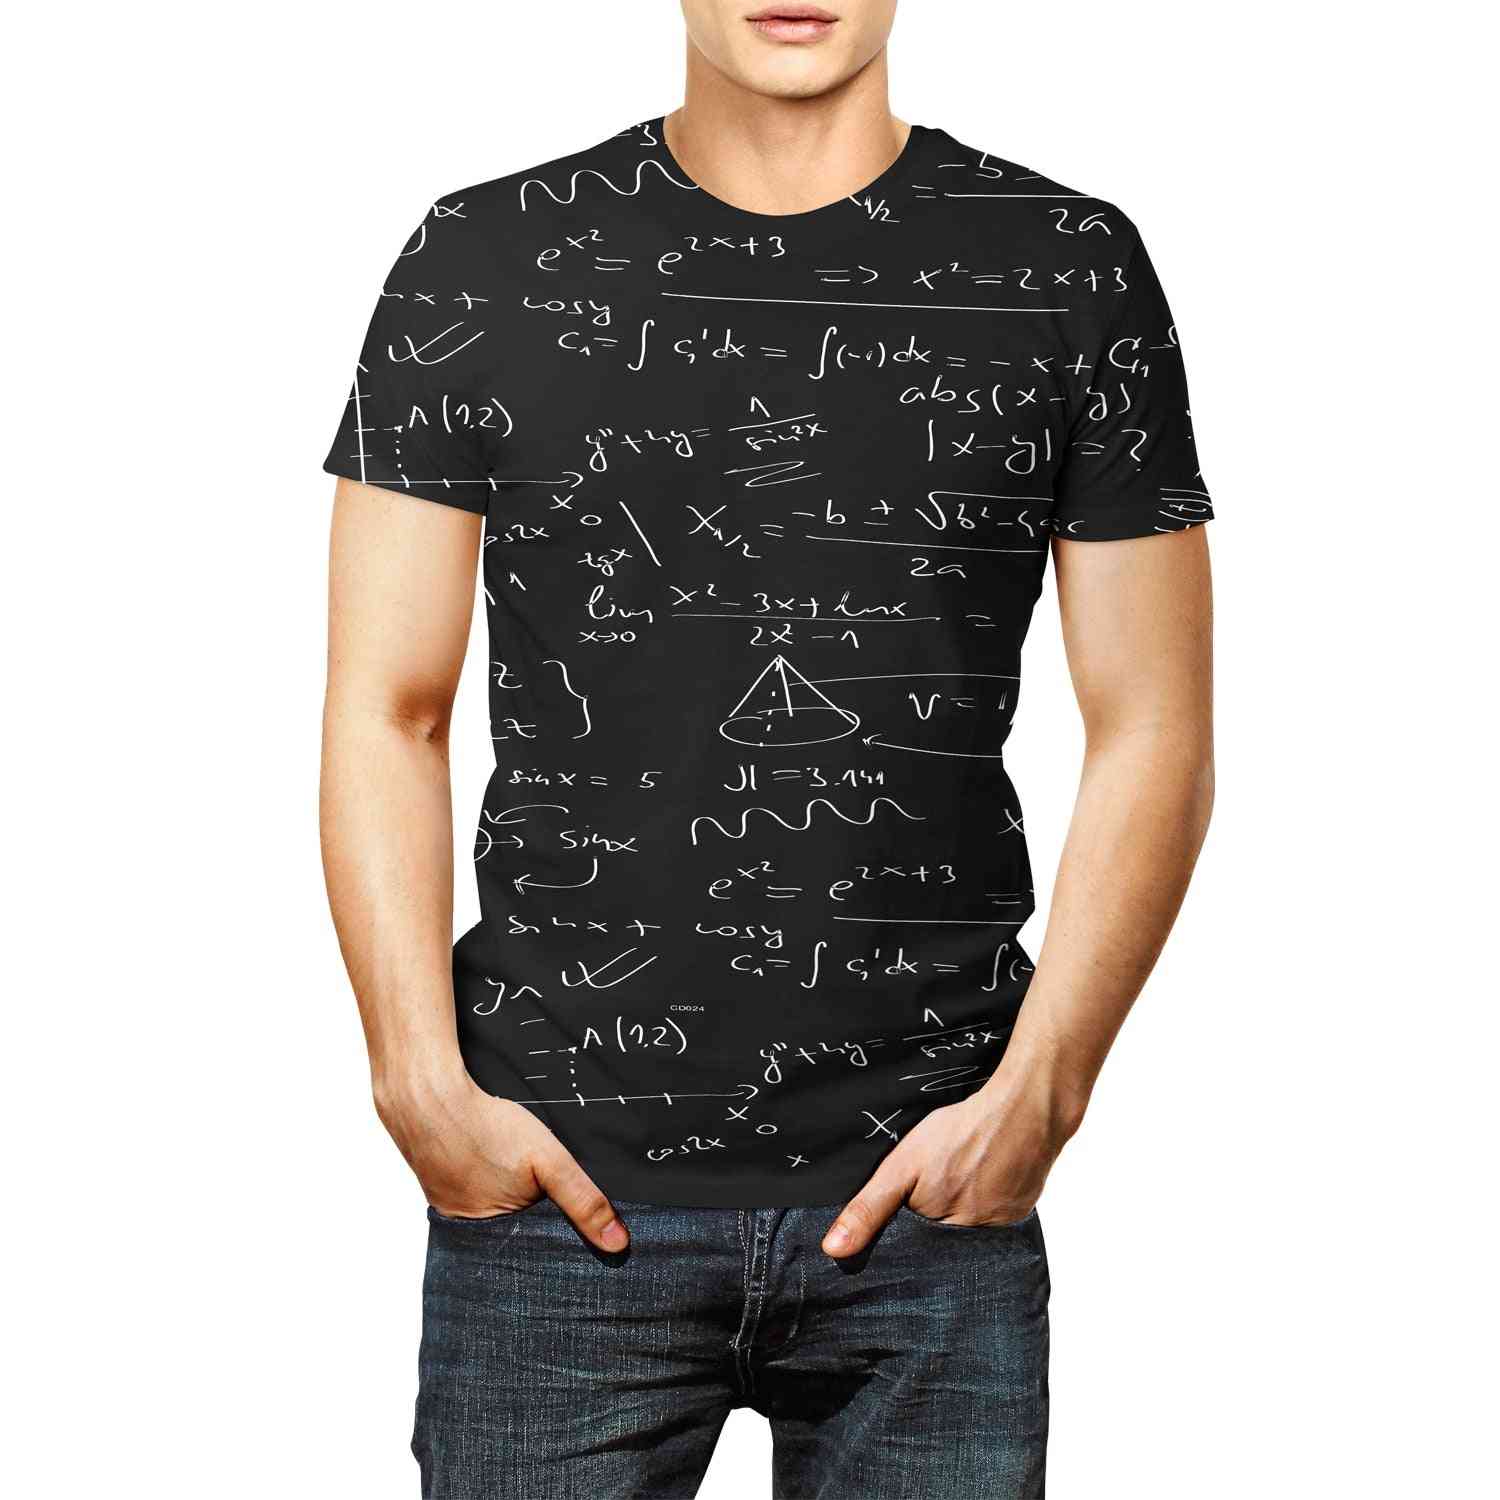 Digital Geometry 3d T-shirt Short Sleeveprinting O-neck Tee Shirts, Men & Women Tops